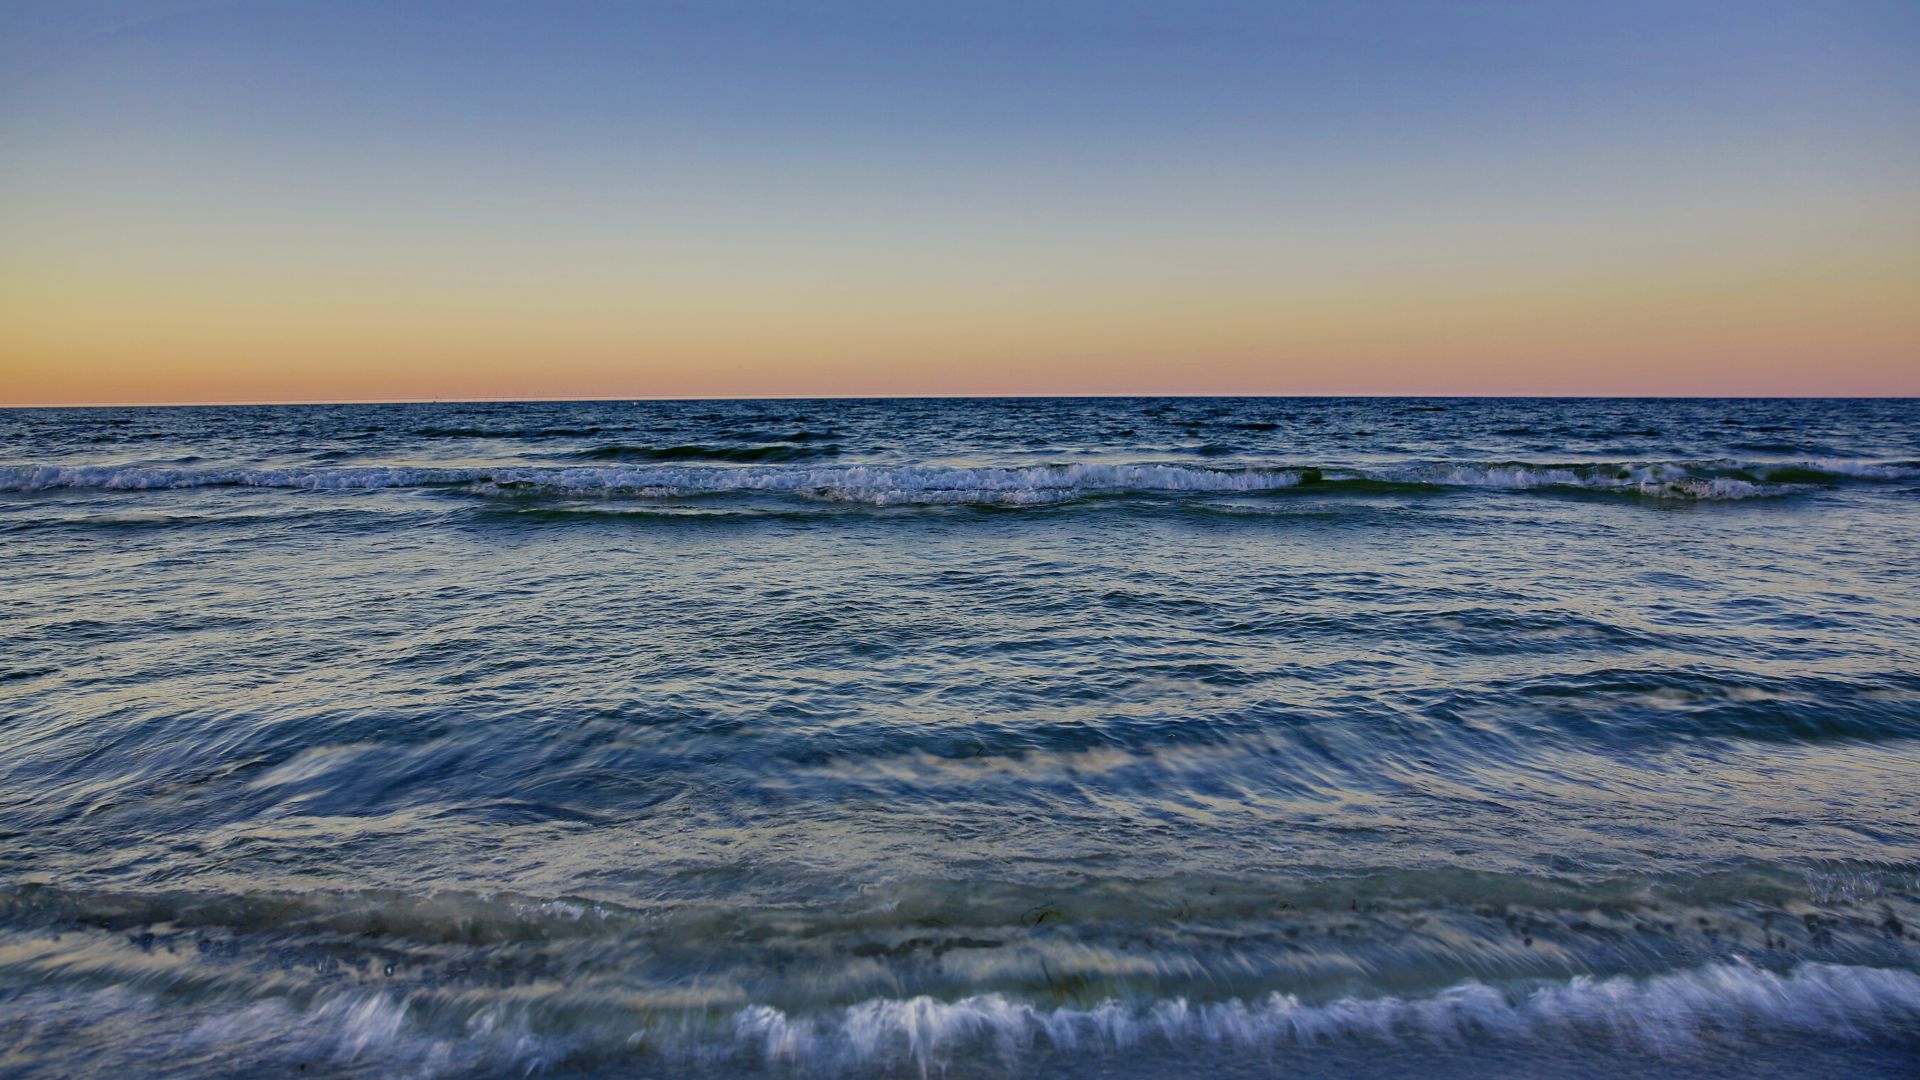 Балтийское море, 4k, 5k, 8k, Балтийское Море, закат, волны, Baltic Sea, 4k, 5k wallpaper, 8k, Ostsee, sunset, waves (horizontal)